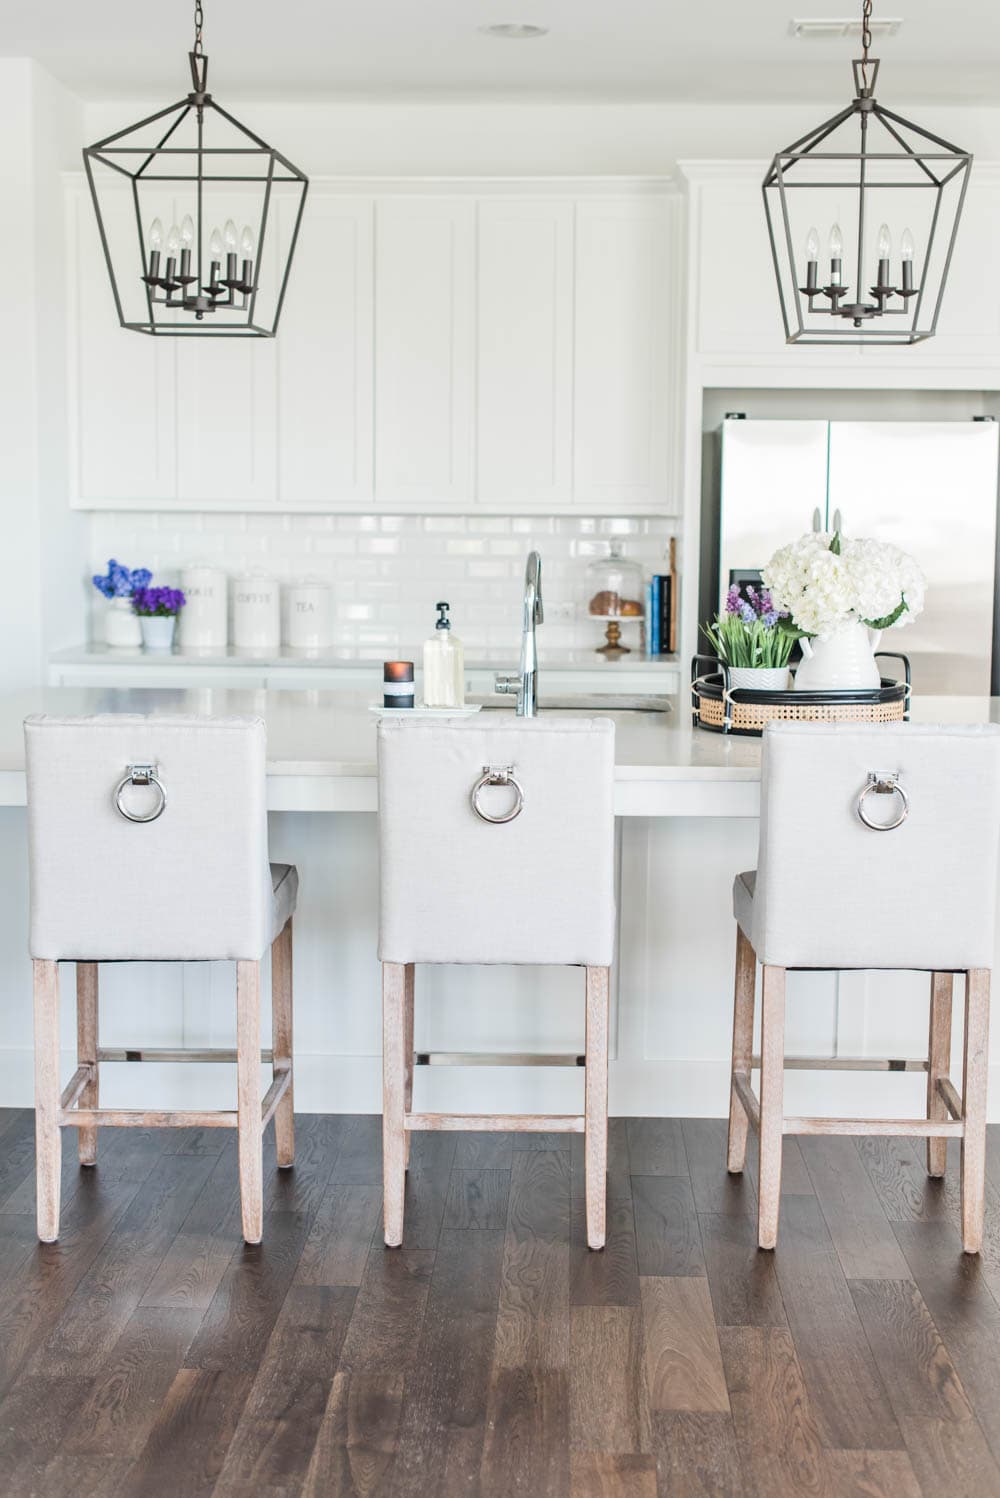 Beautiful summer accents in this all white kitchen. More white kitchen ideas on https://ablissfulnest.com #ABlissfulNest #whitekitchen #kitcheninspiration #kitchenideas